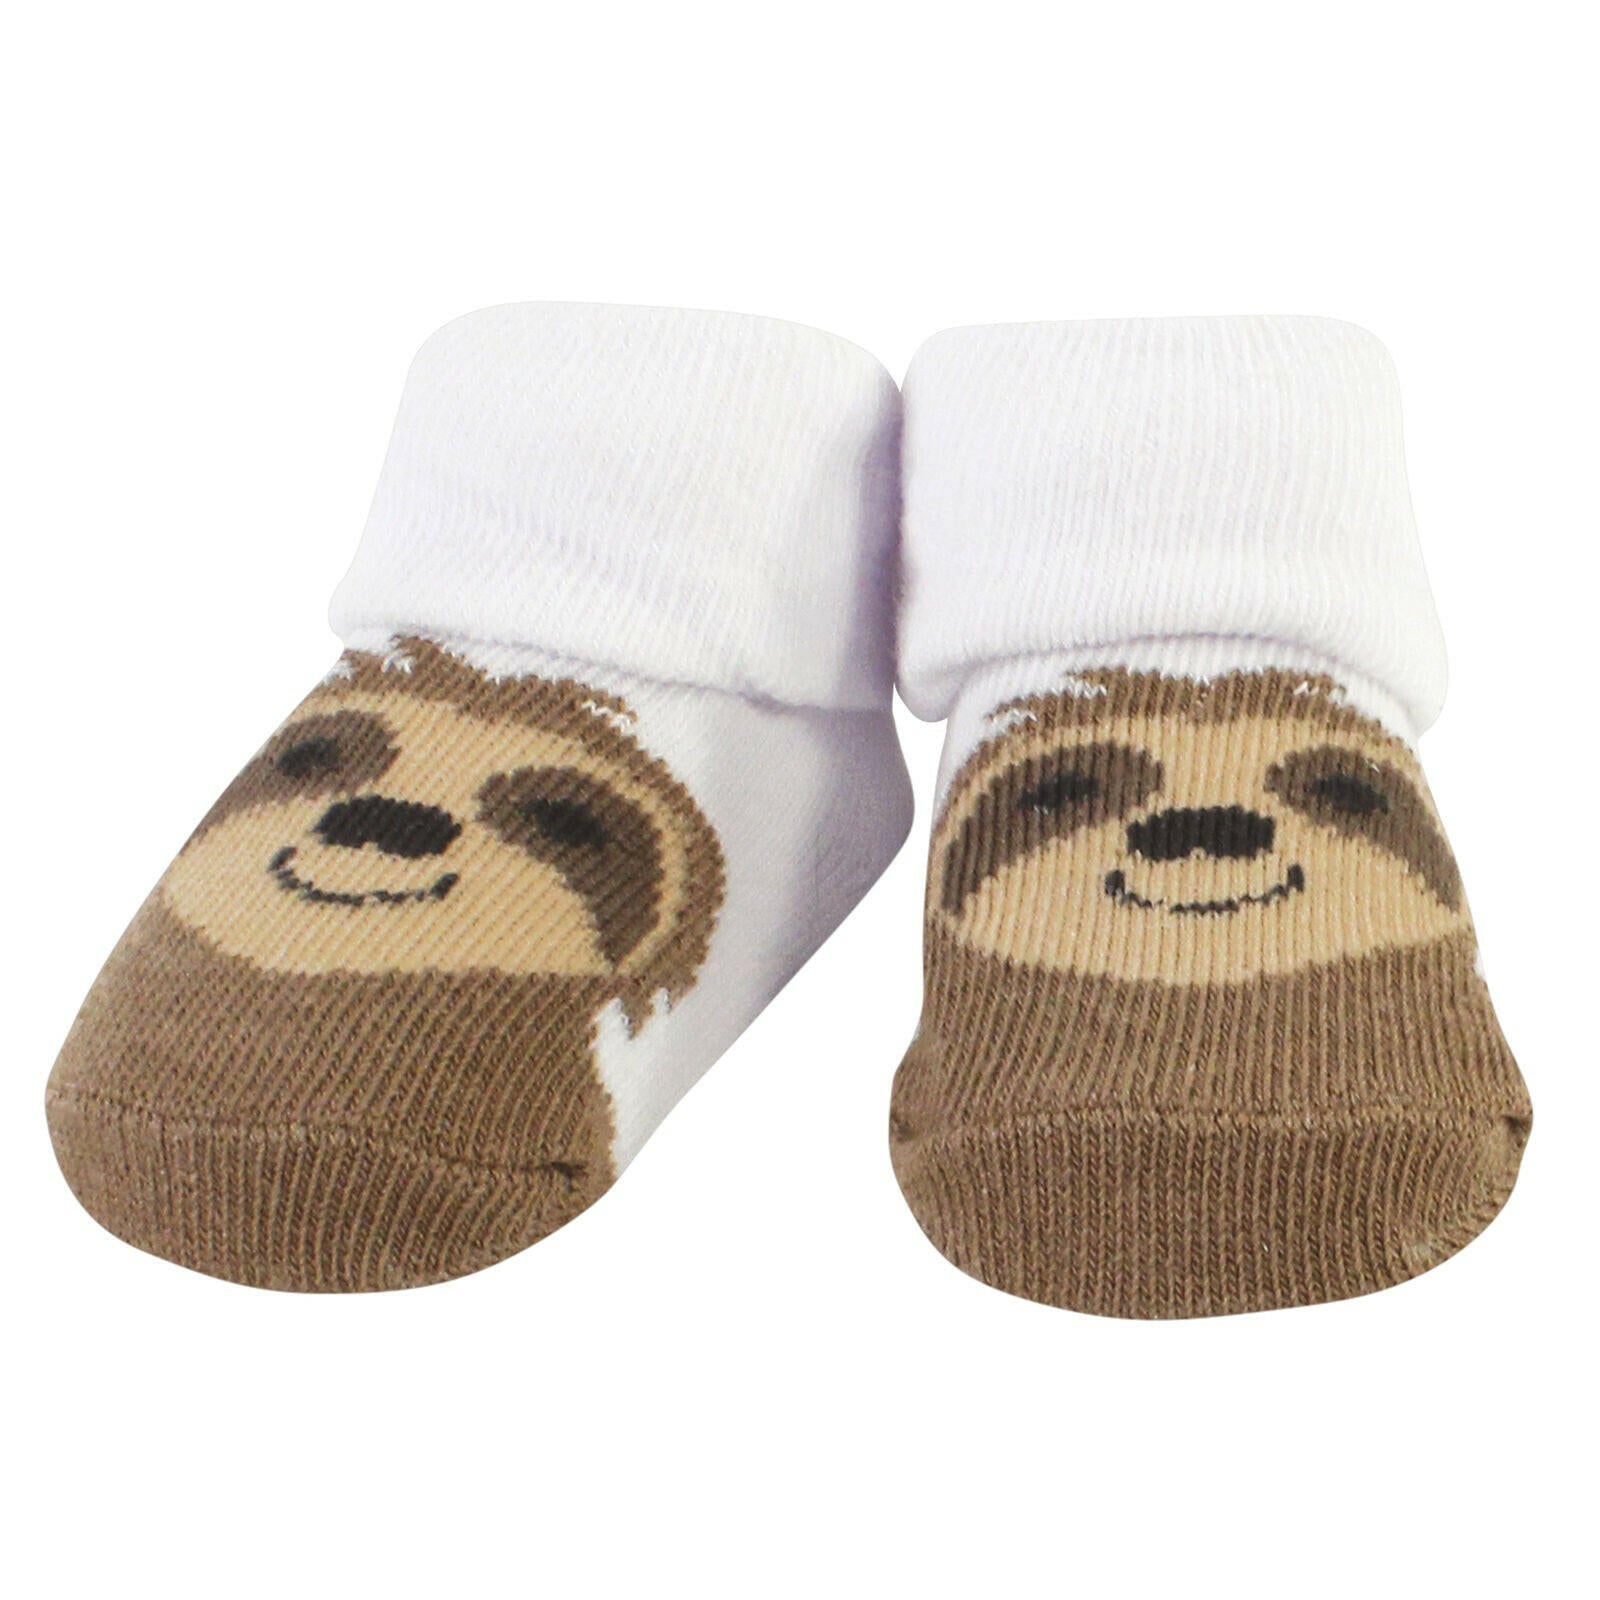 Hudson Baby Infant Boy Cotton Bib and Sock Set, Sloth, One Size